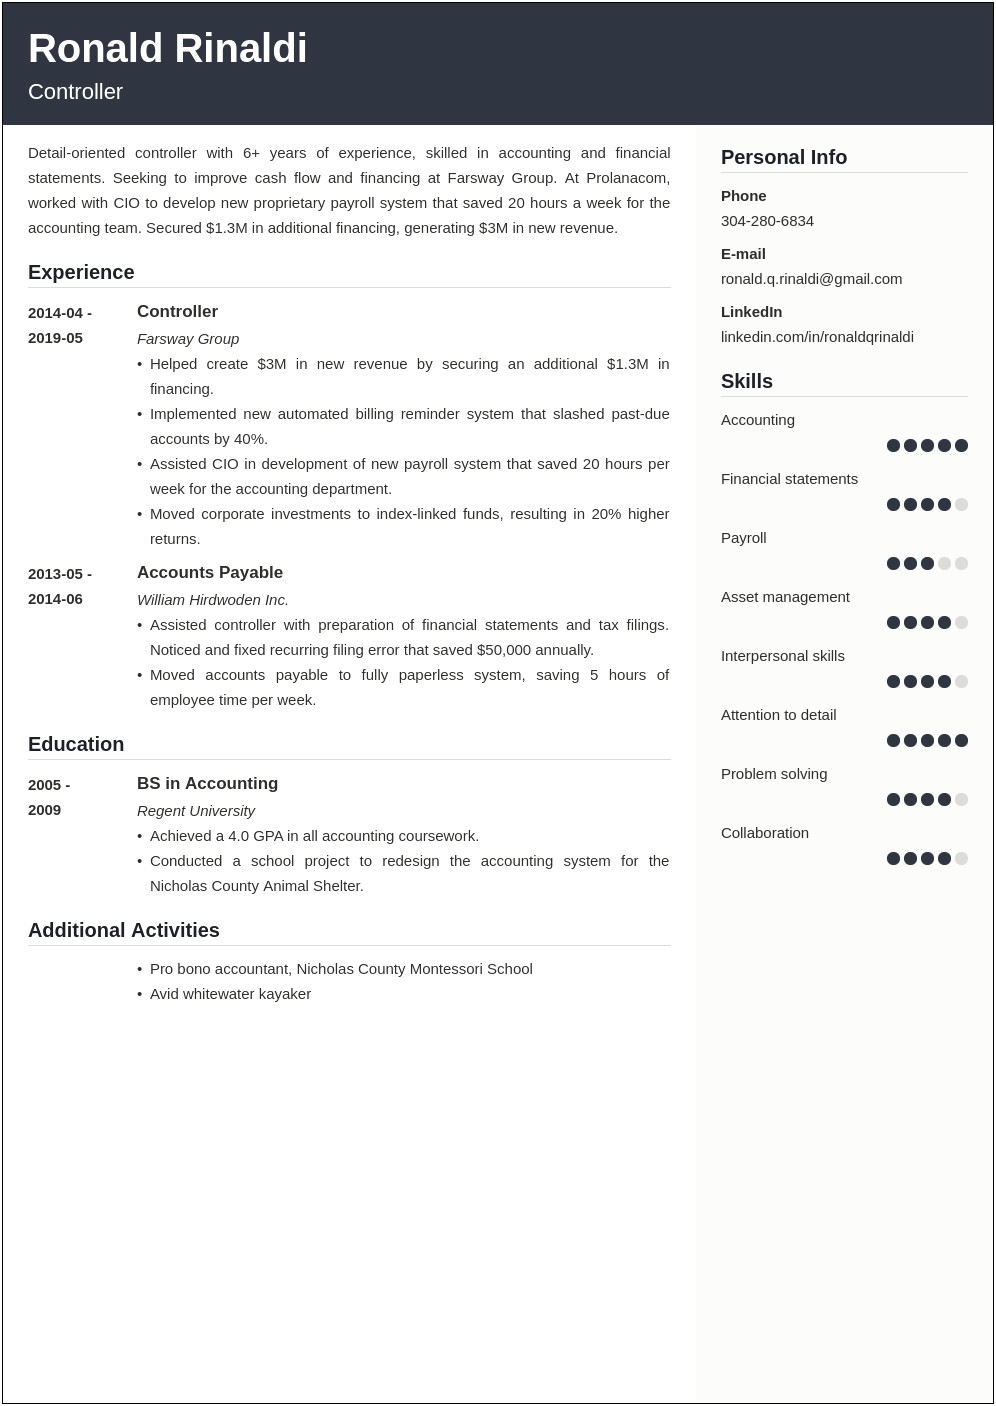 Assistant Controller Job Description Resume